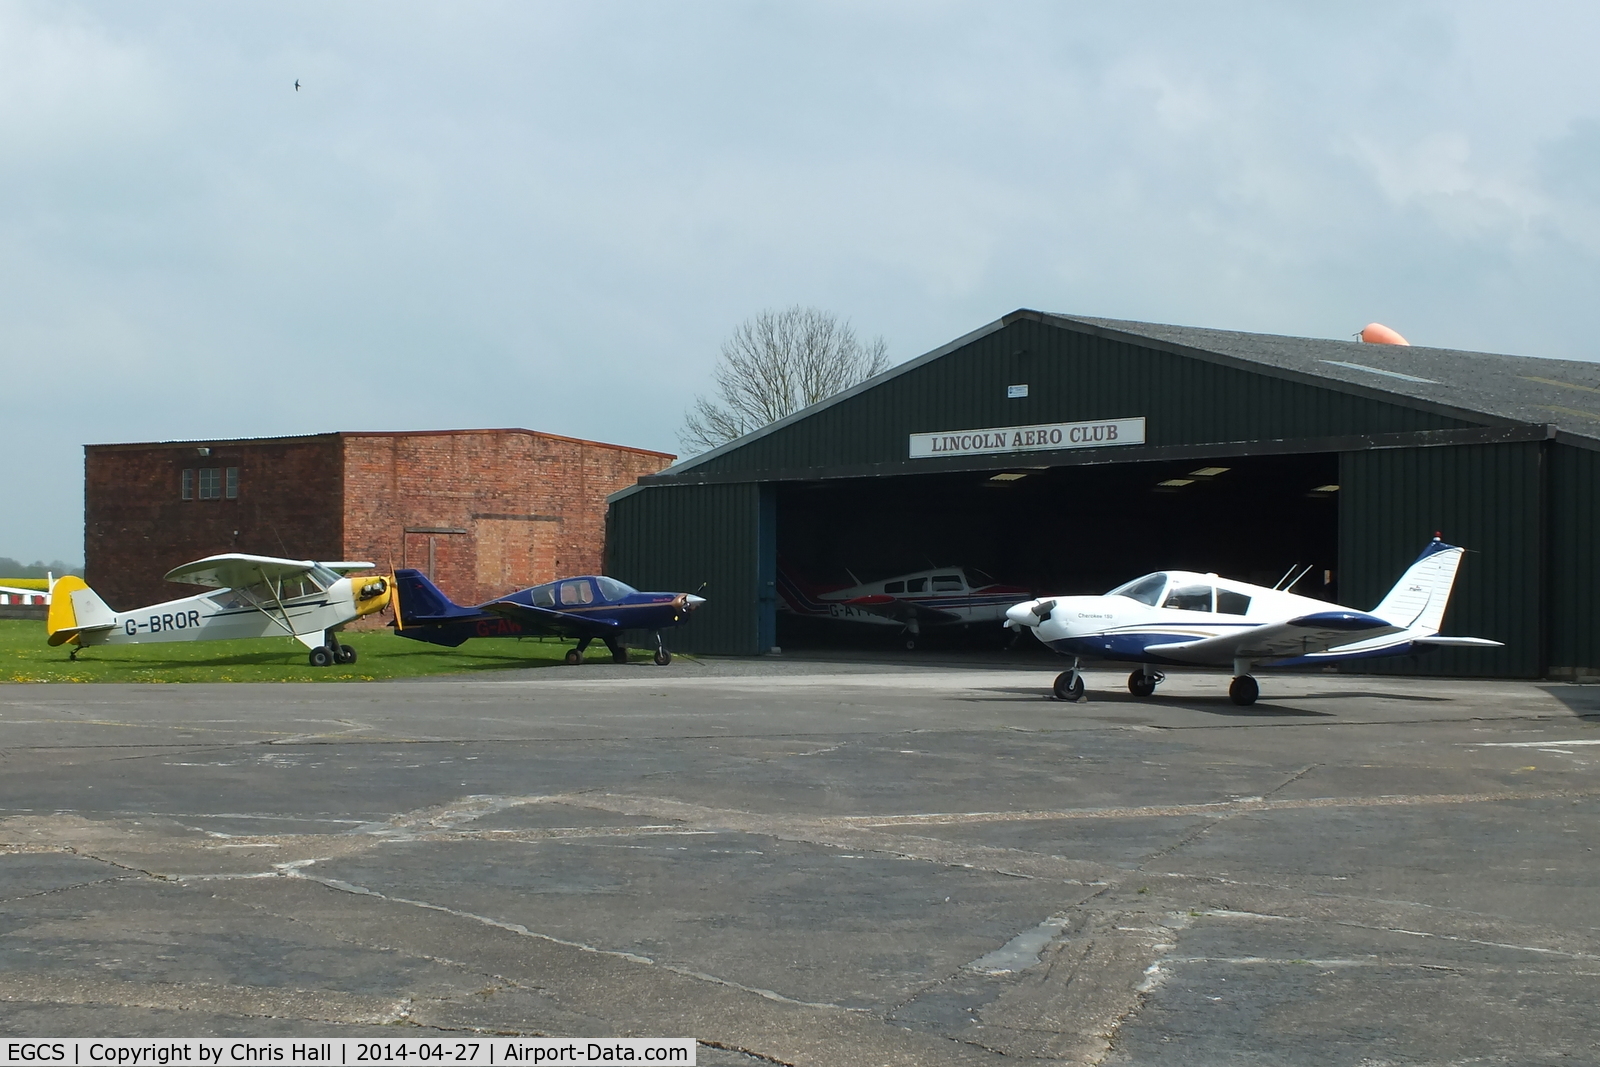 Sturgate Airfield Airport, Lincoln, England United Kingdom (EGCS) - Lincoln Flying Club hangar at Stugate